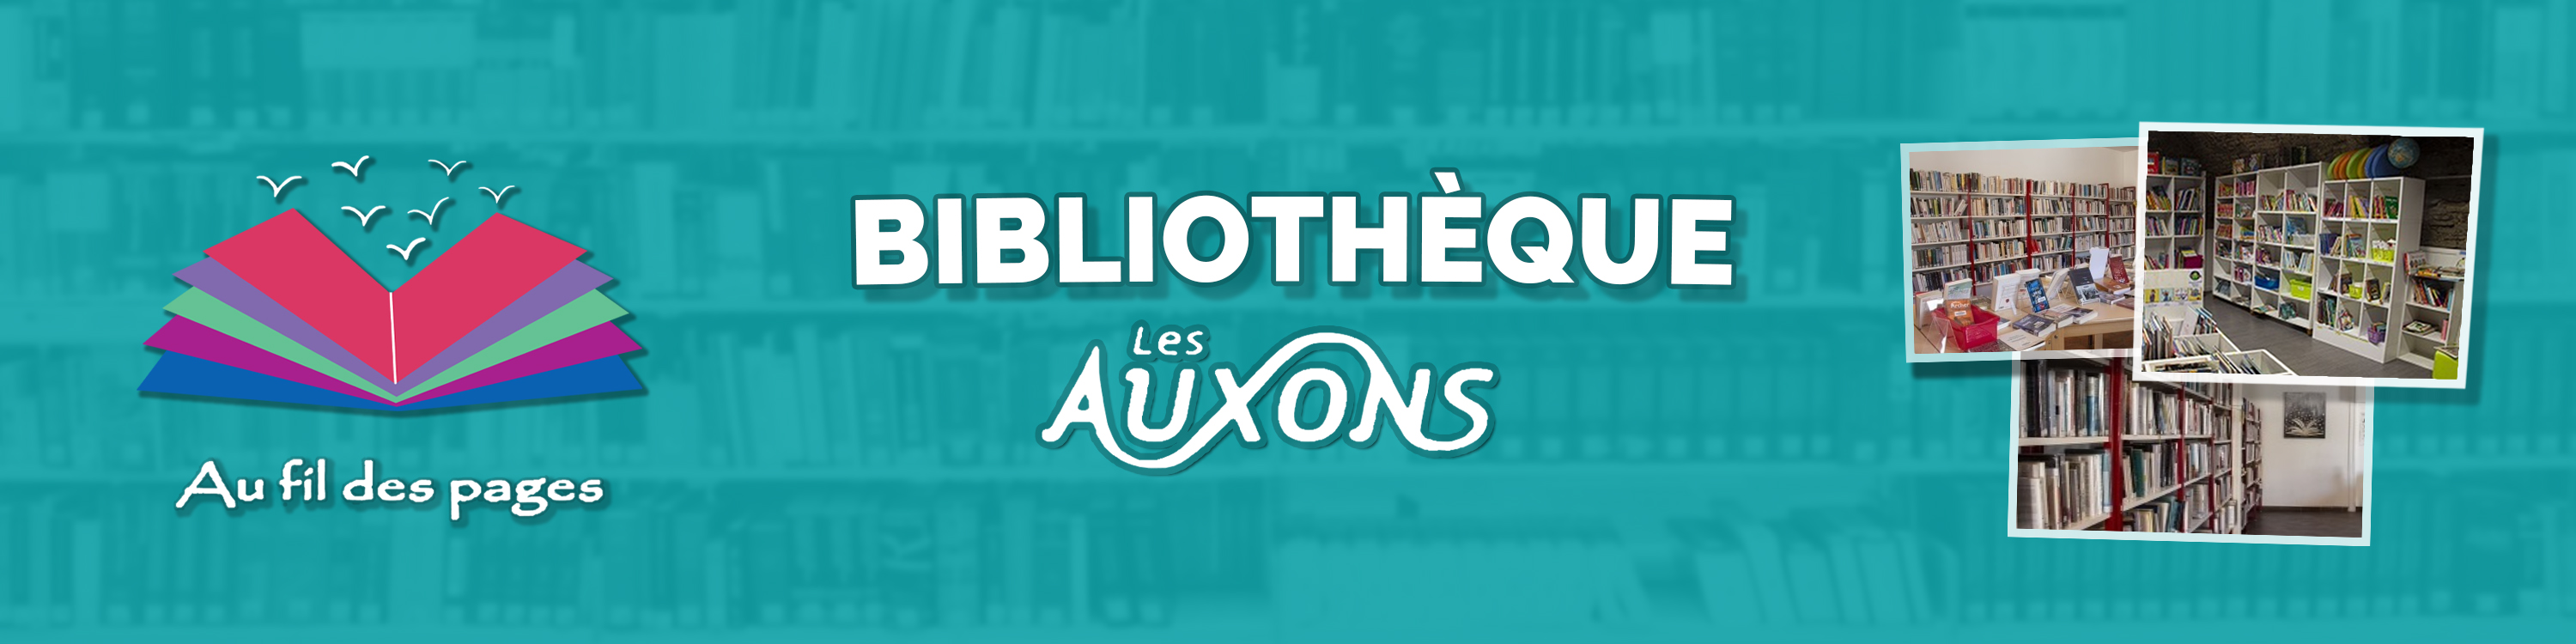 Bibliothèque - Les Auxons